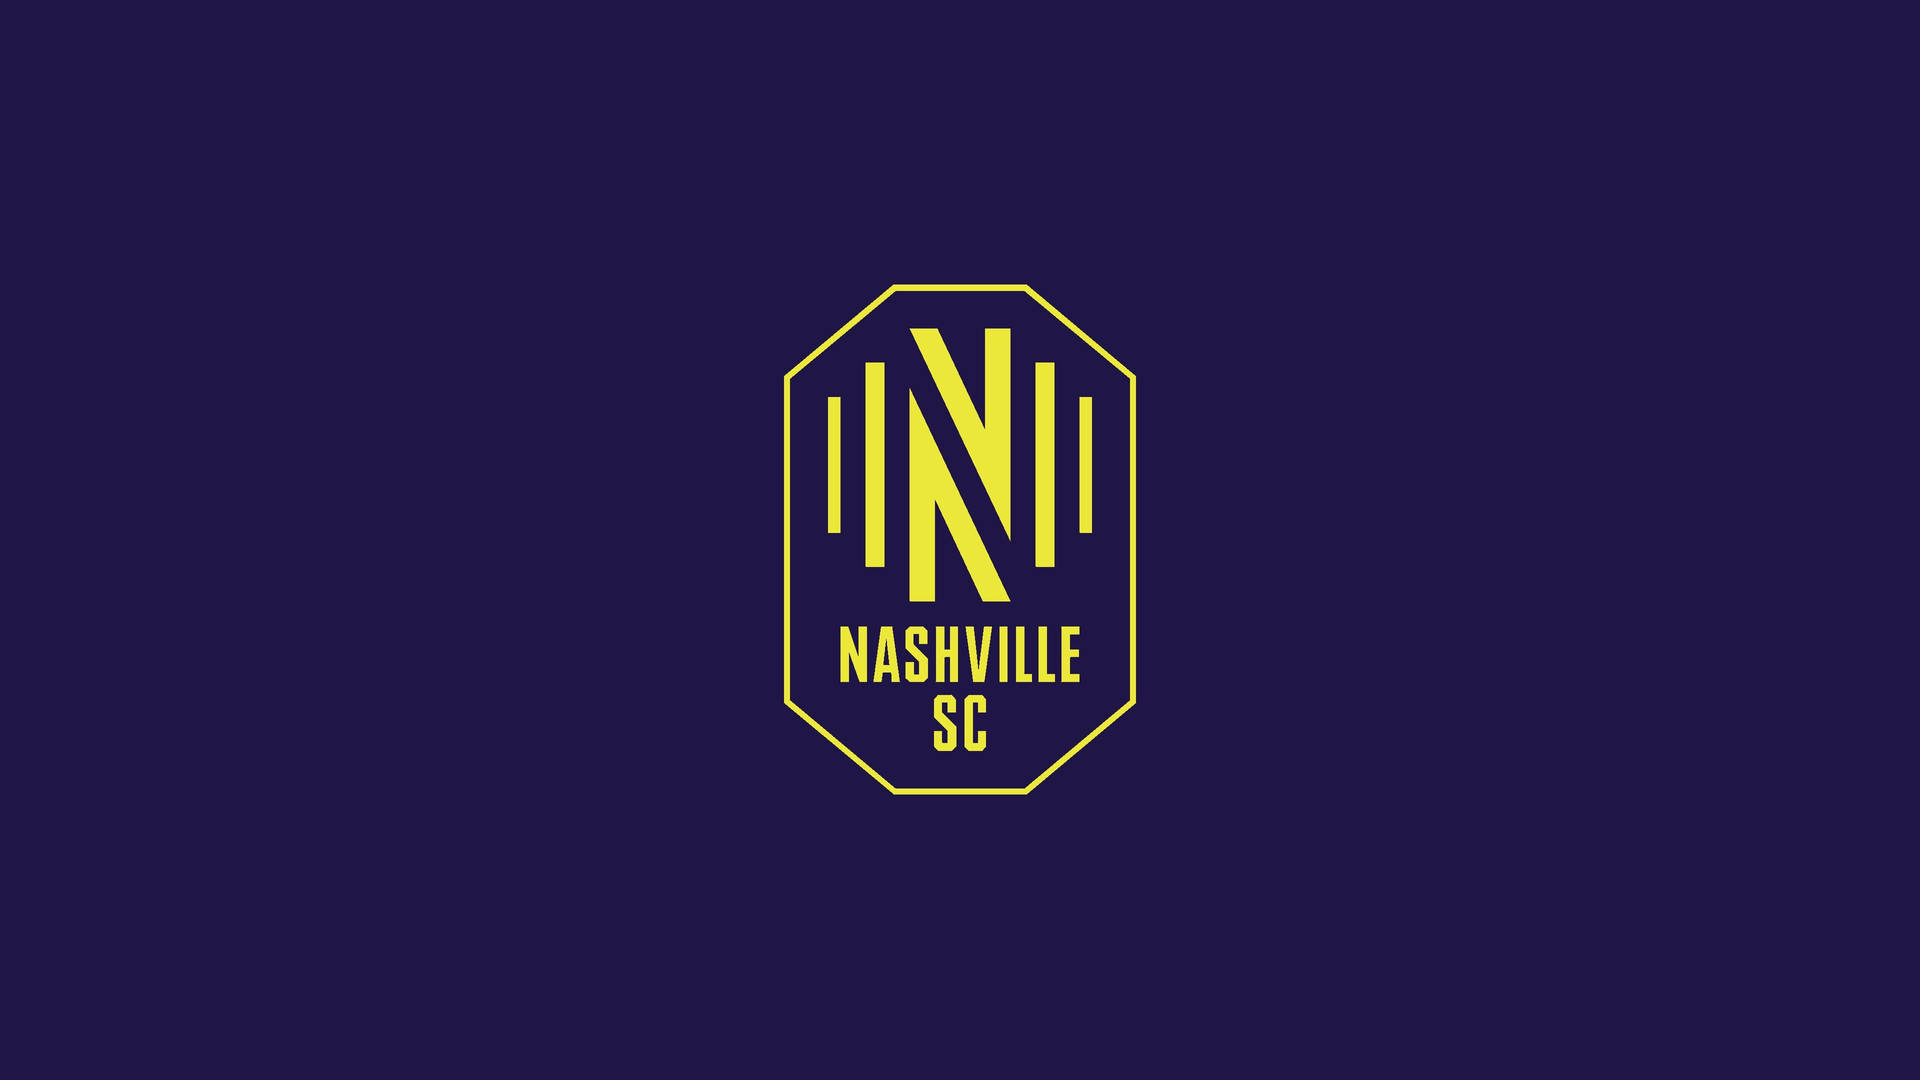 Nashville, Sc 3840 X 2160 Wallpaper